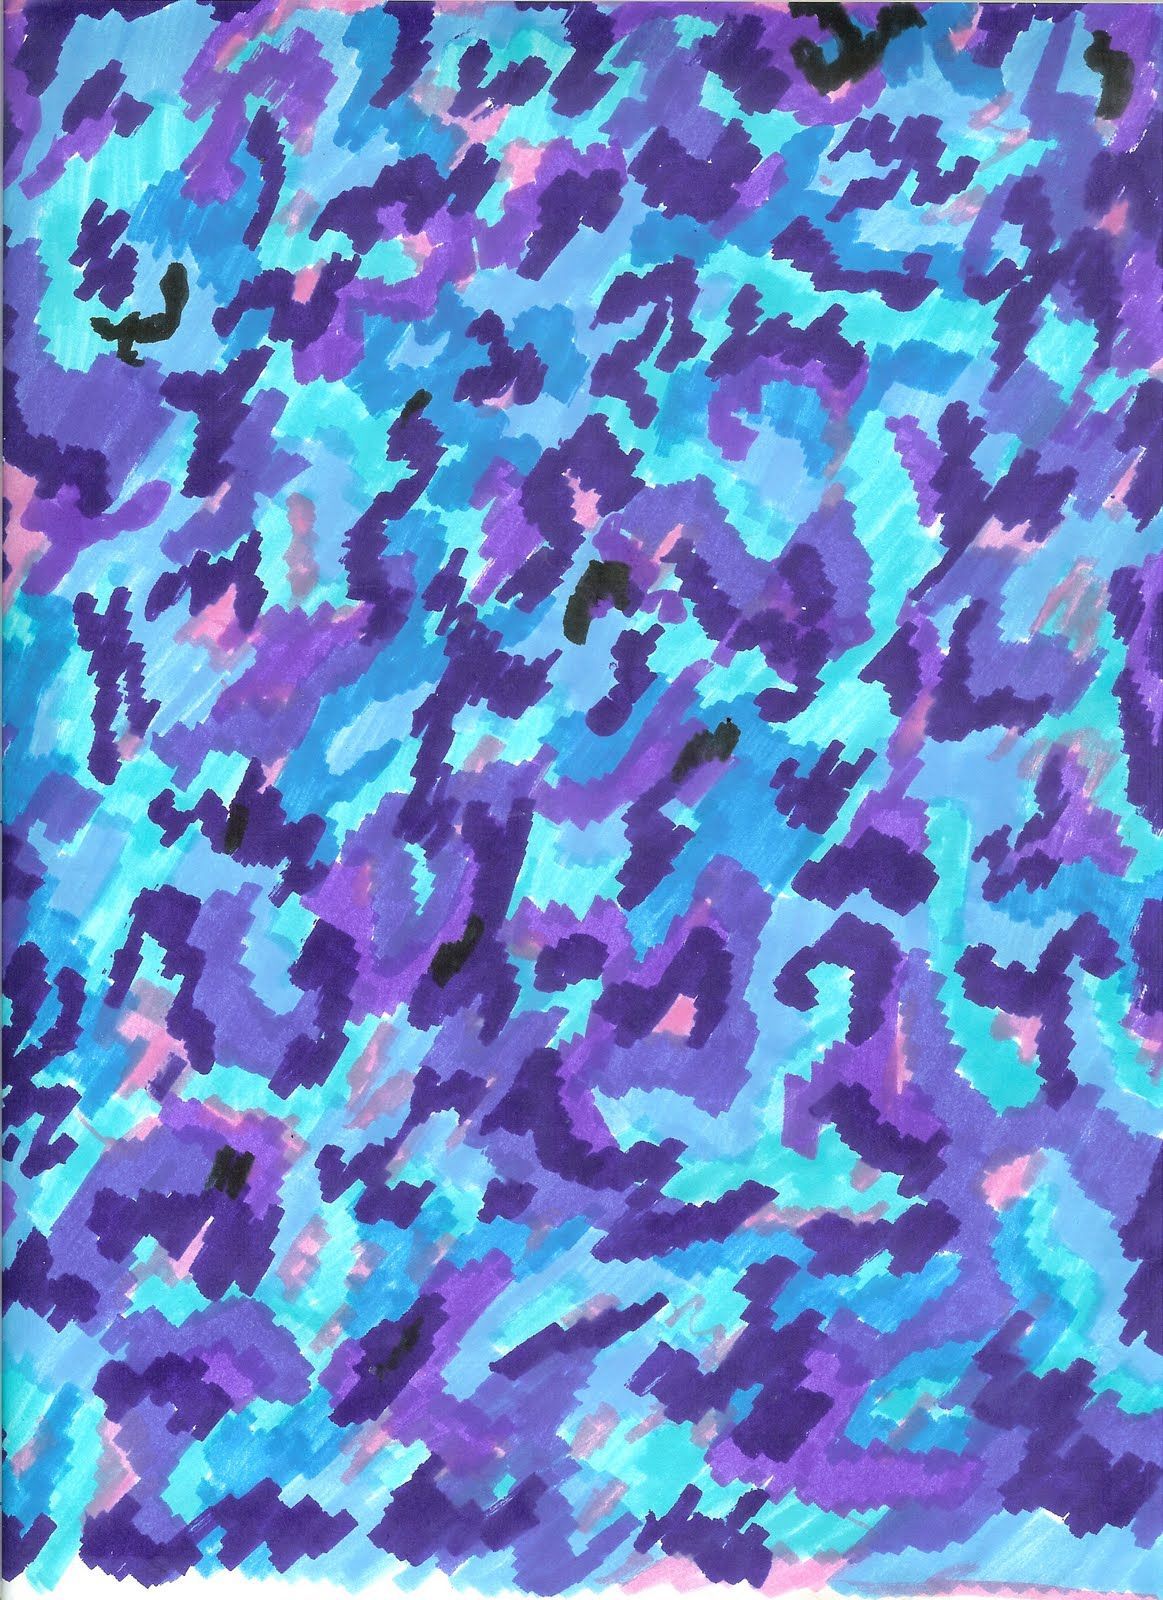 Purple Camo Wallpapers - Wallpaper Cave